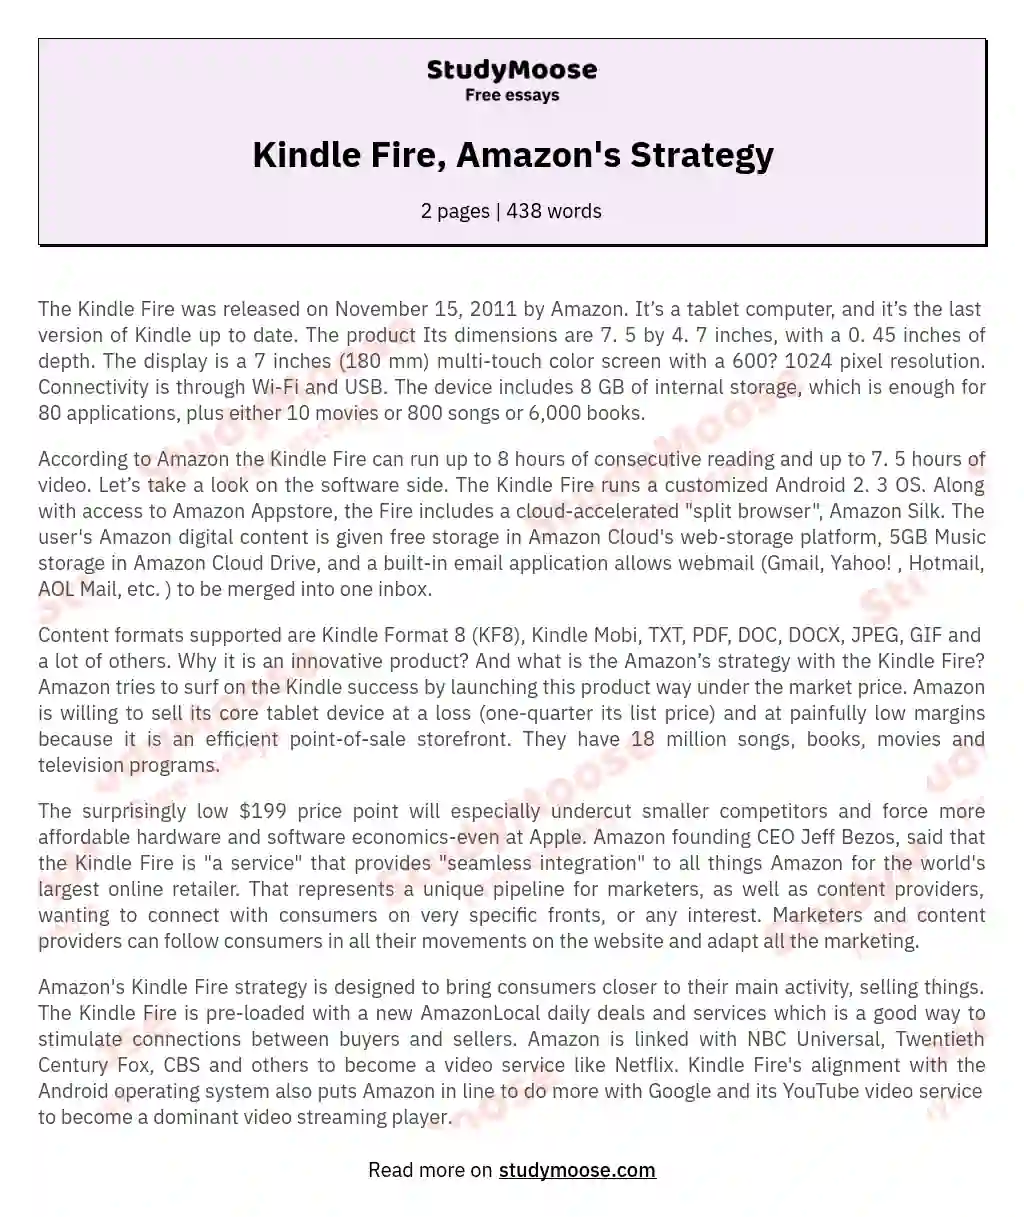 Kindle Fire, Amazon's Strategy essay